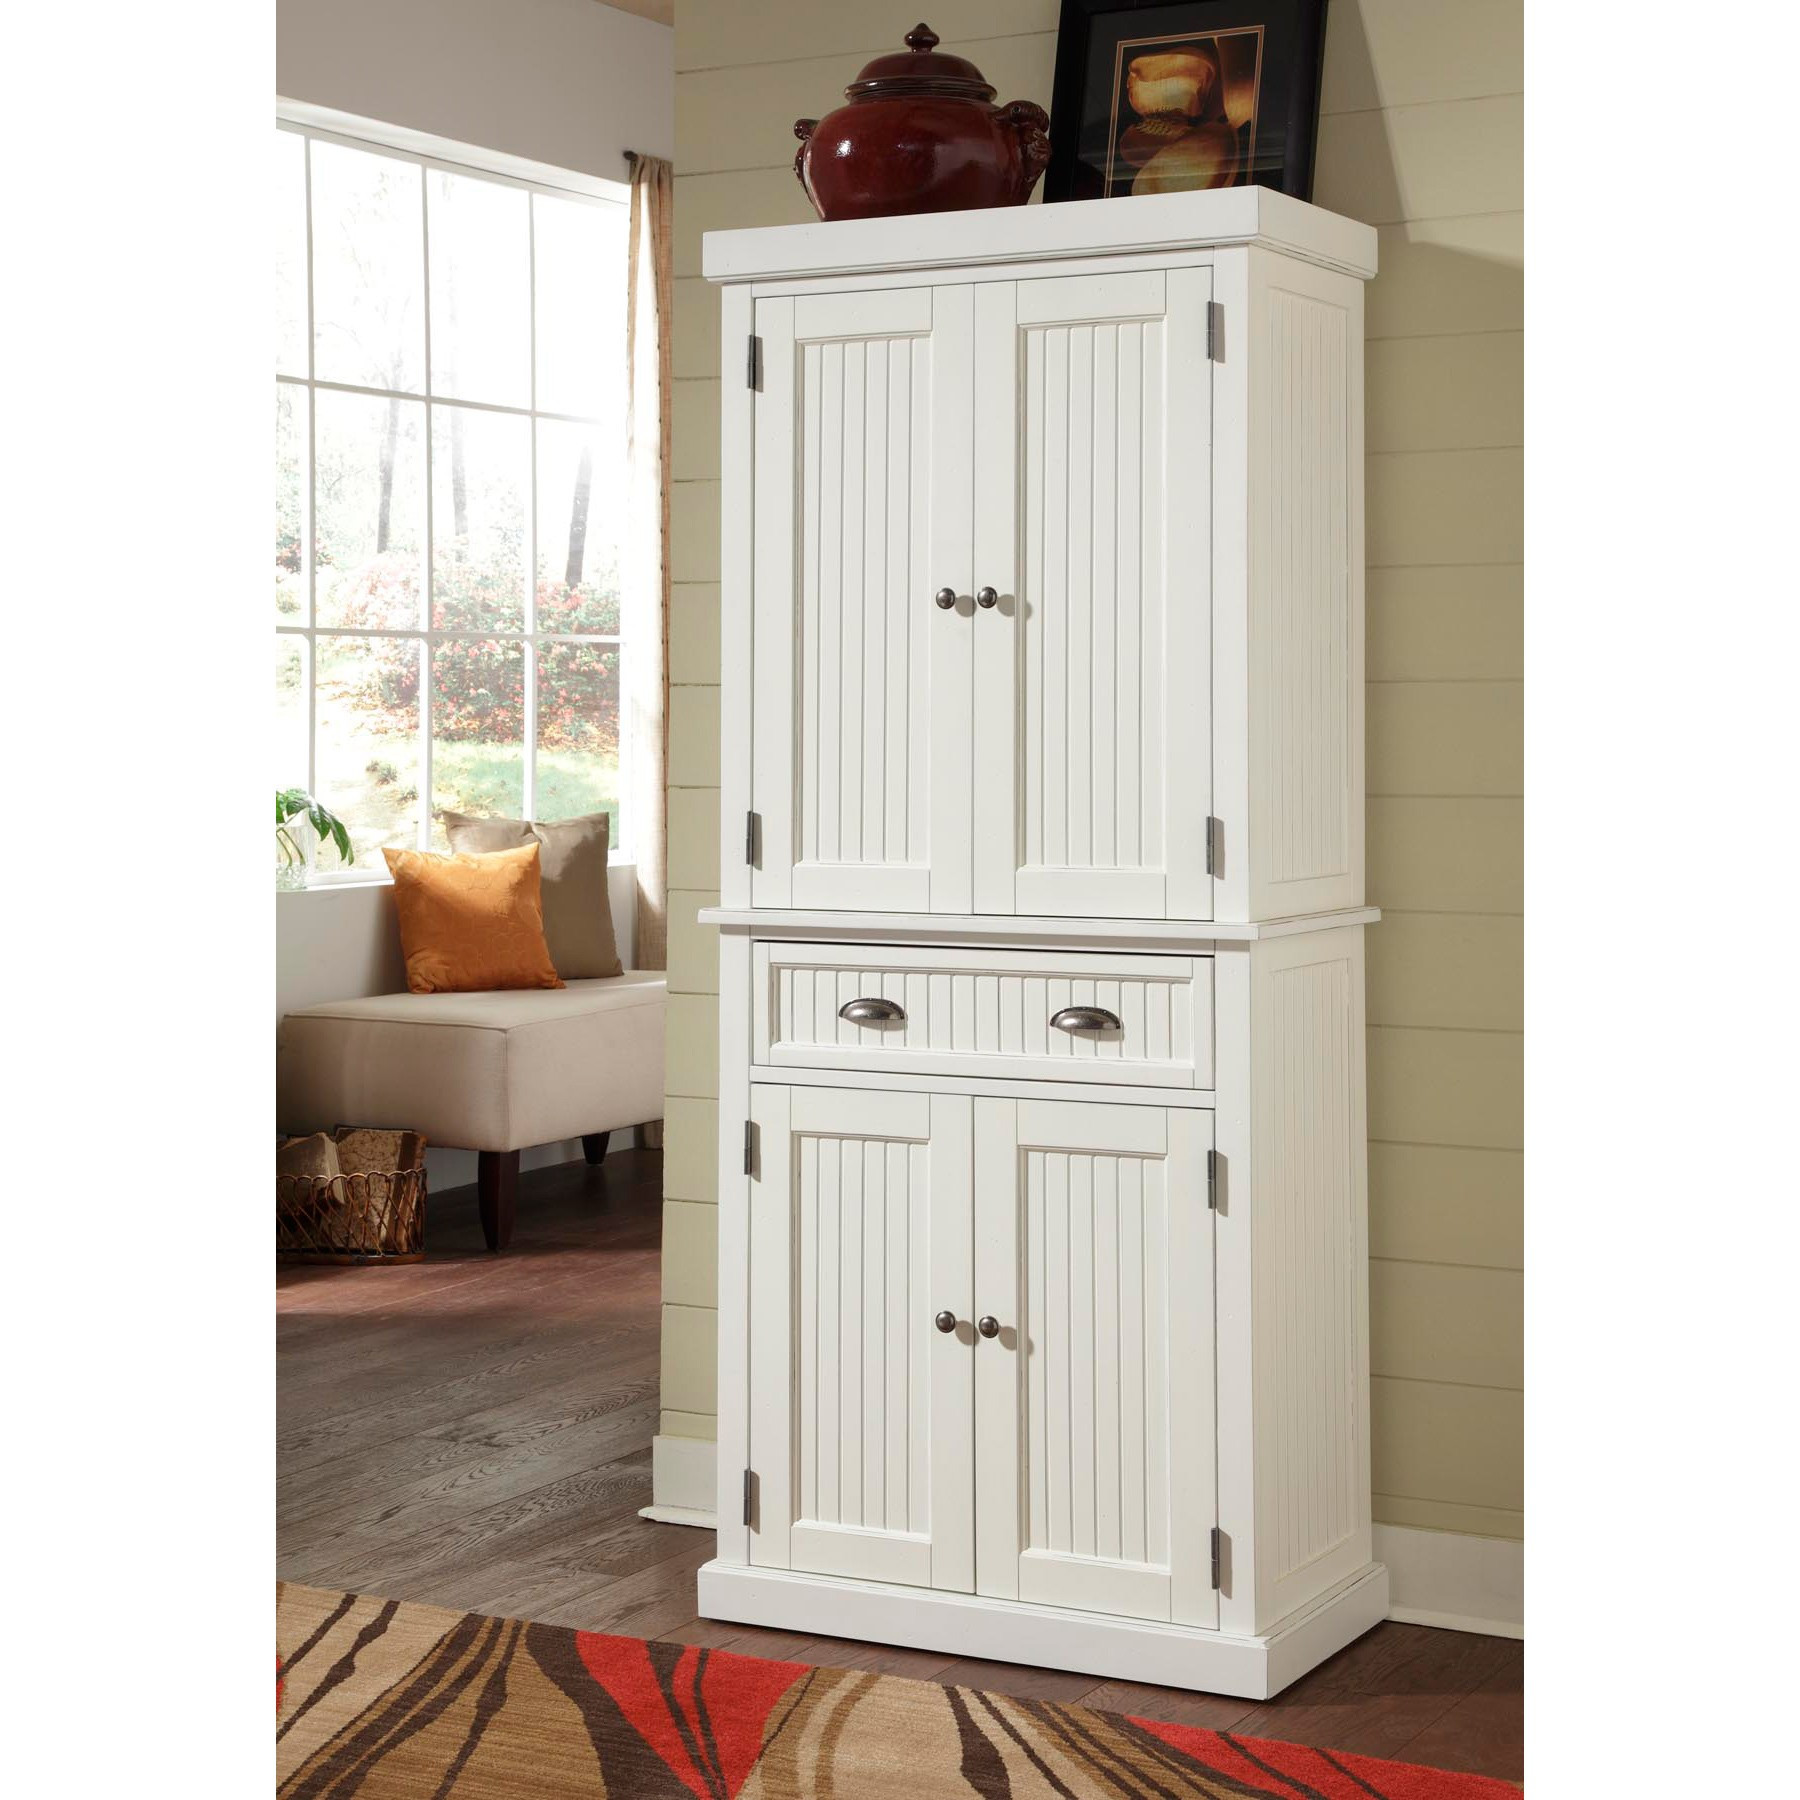 White Kitchen Pantry Freestanding
 Best Free Standing Linen Closet – HomesFeed